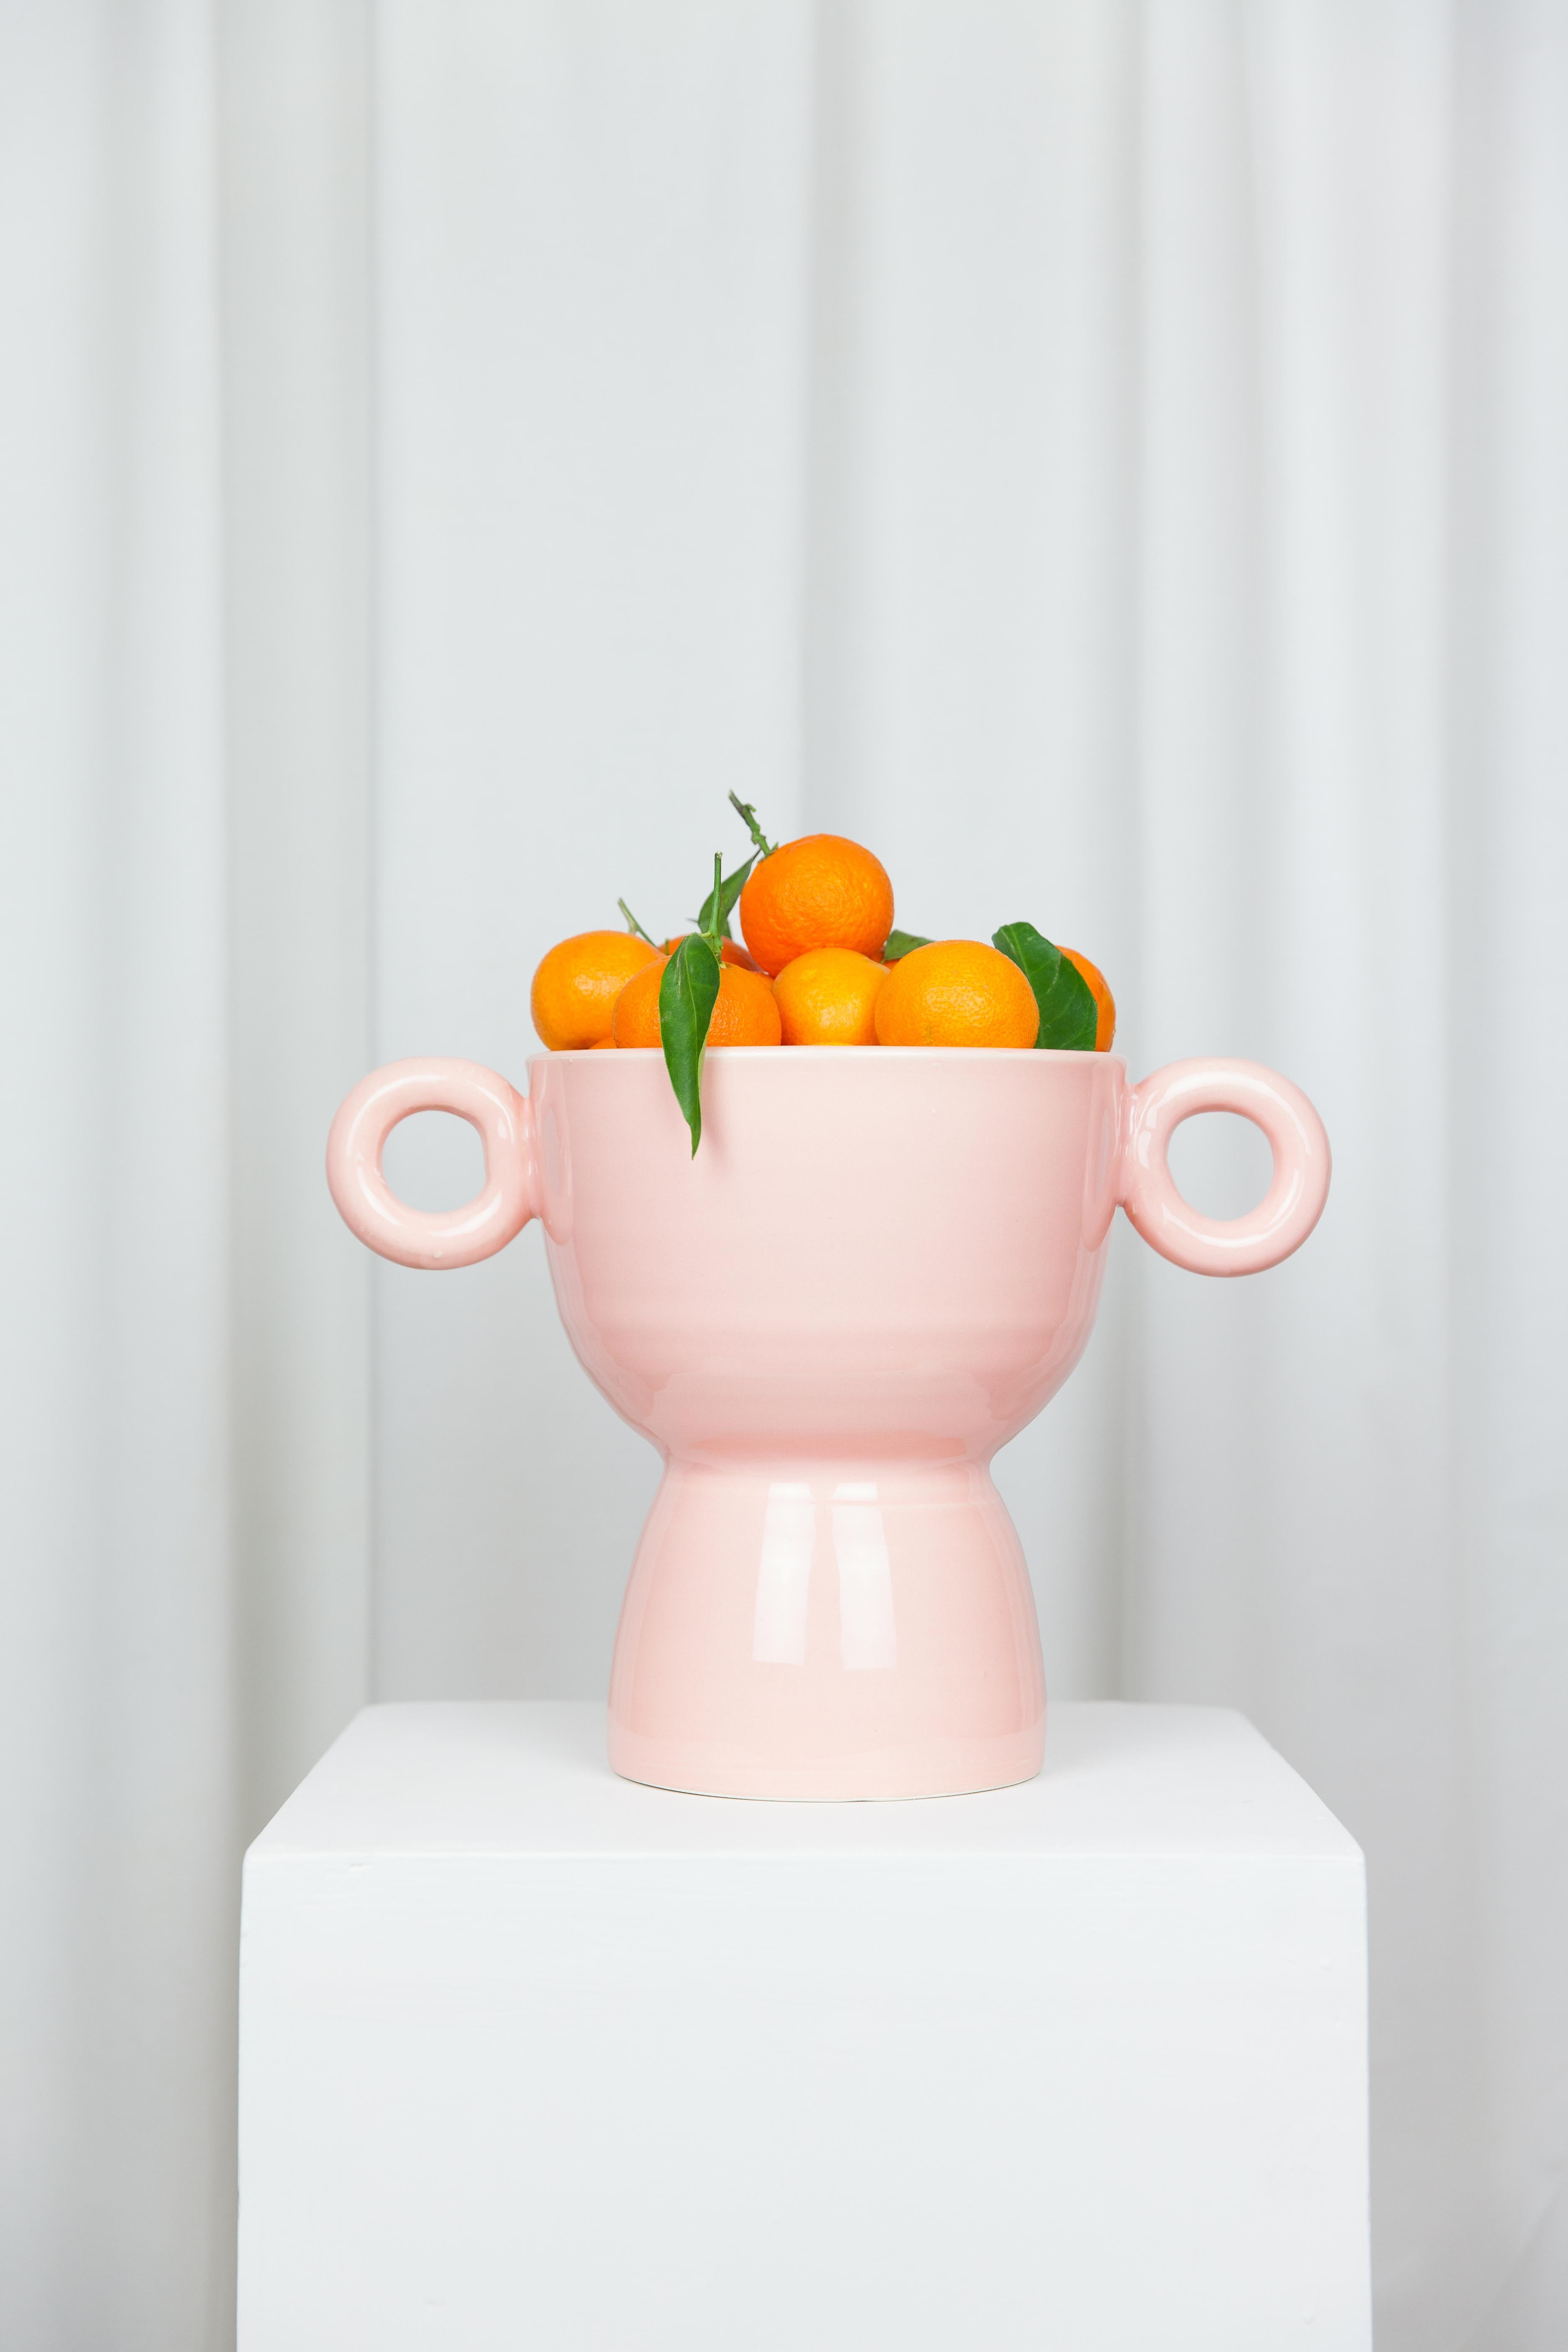 Post-Modern Fruit Cup by Lola Mayeras